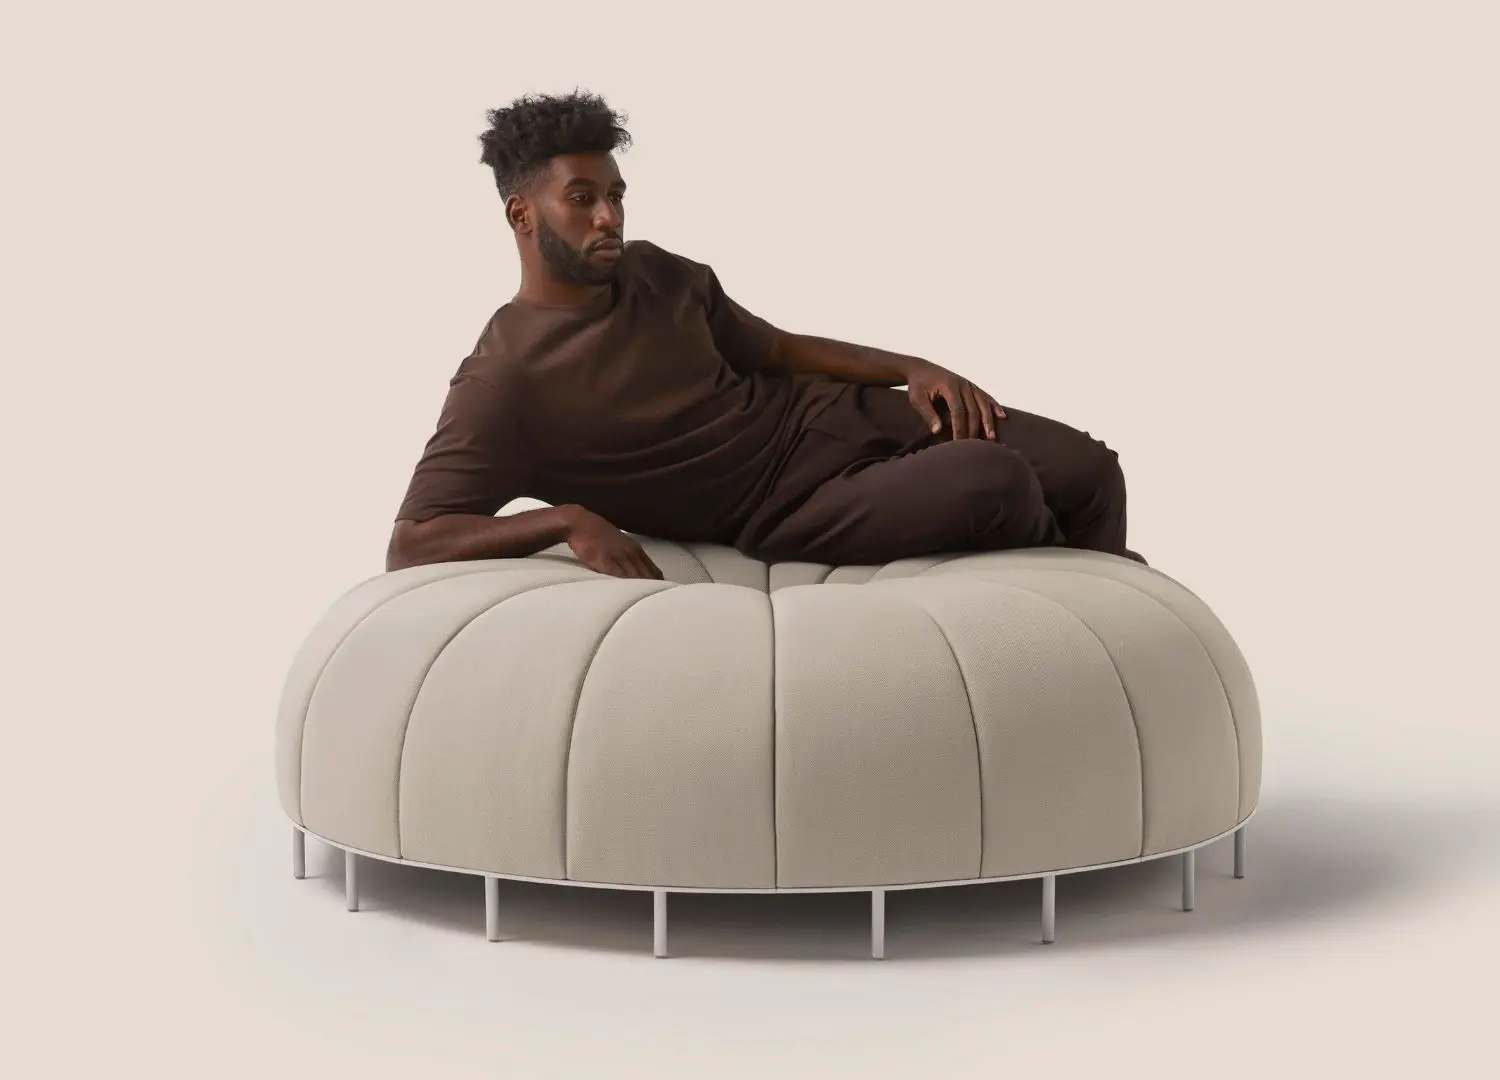 Worm _ Modular sofa bench by Clap Studio x Missana _ Furniture design